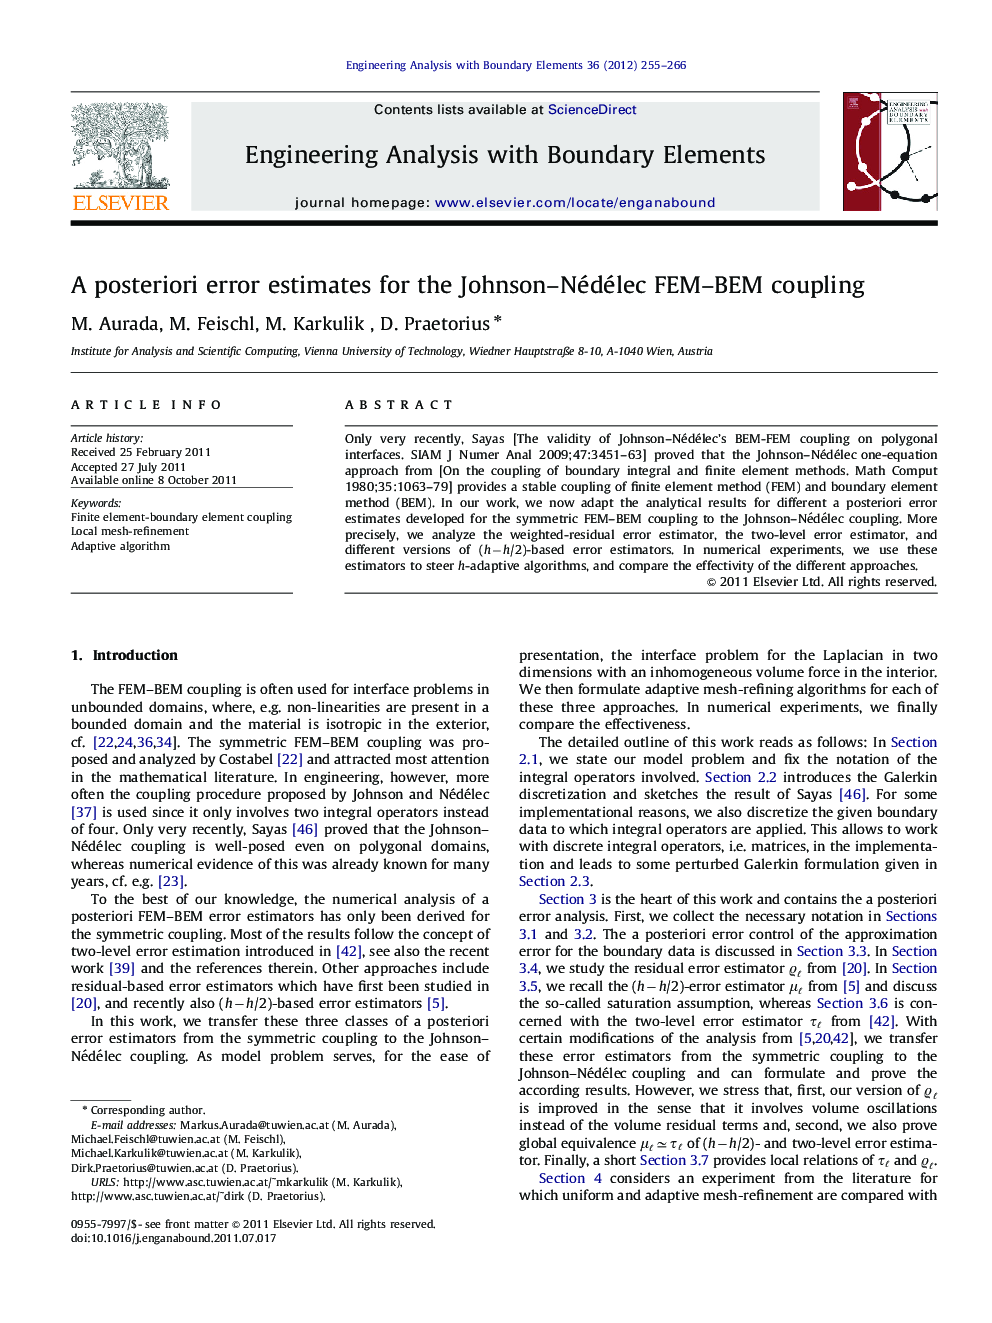 A posteriori error estimates for the Johnson-Nédélec FEM-BEM coupling